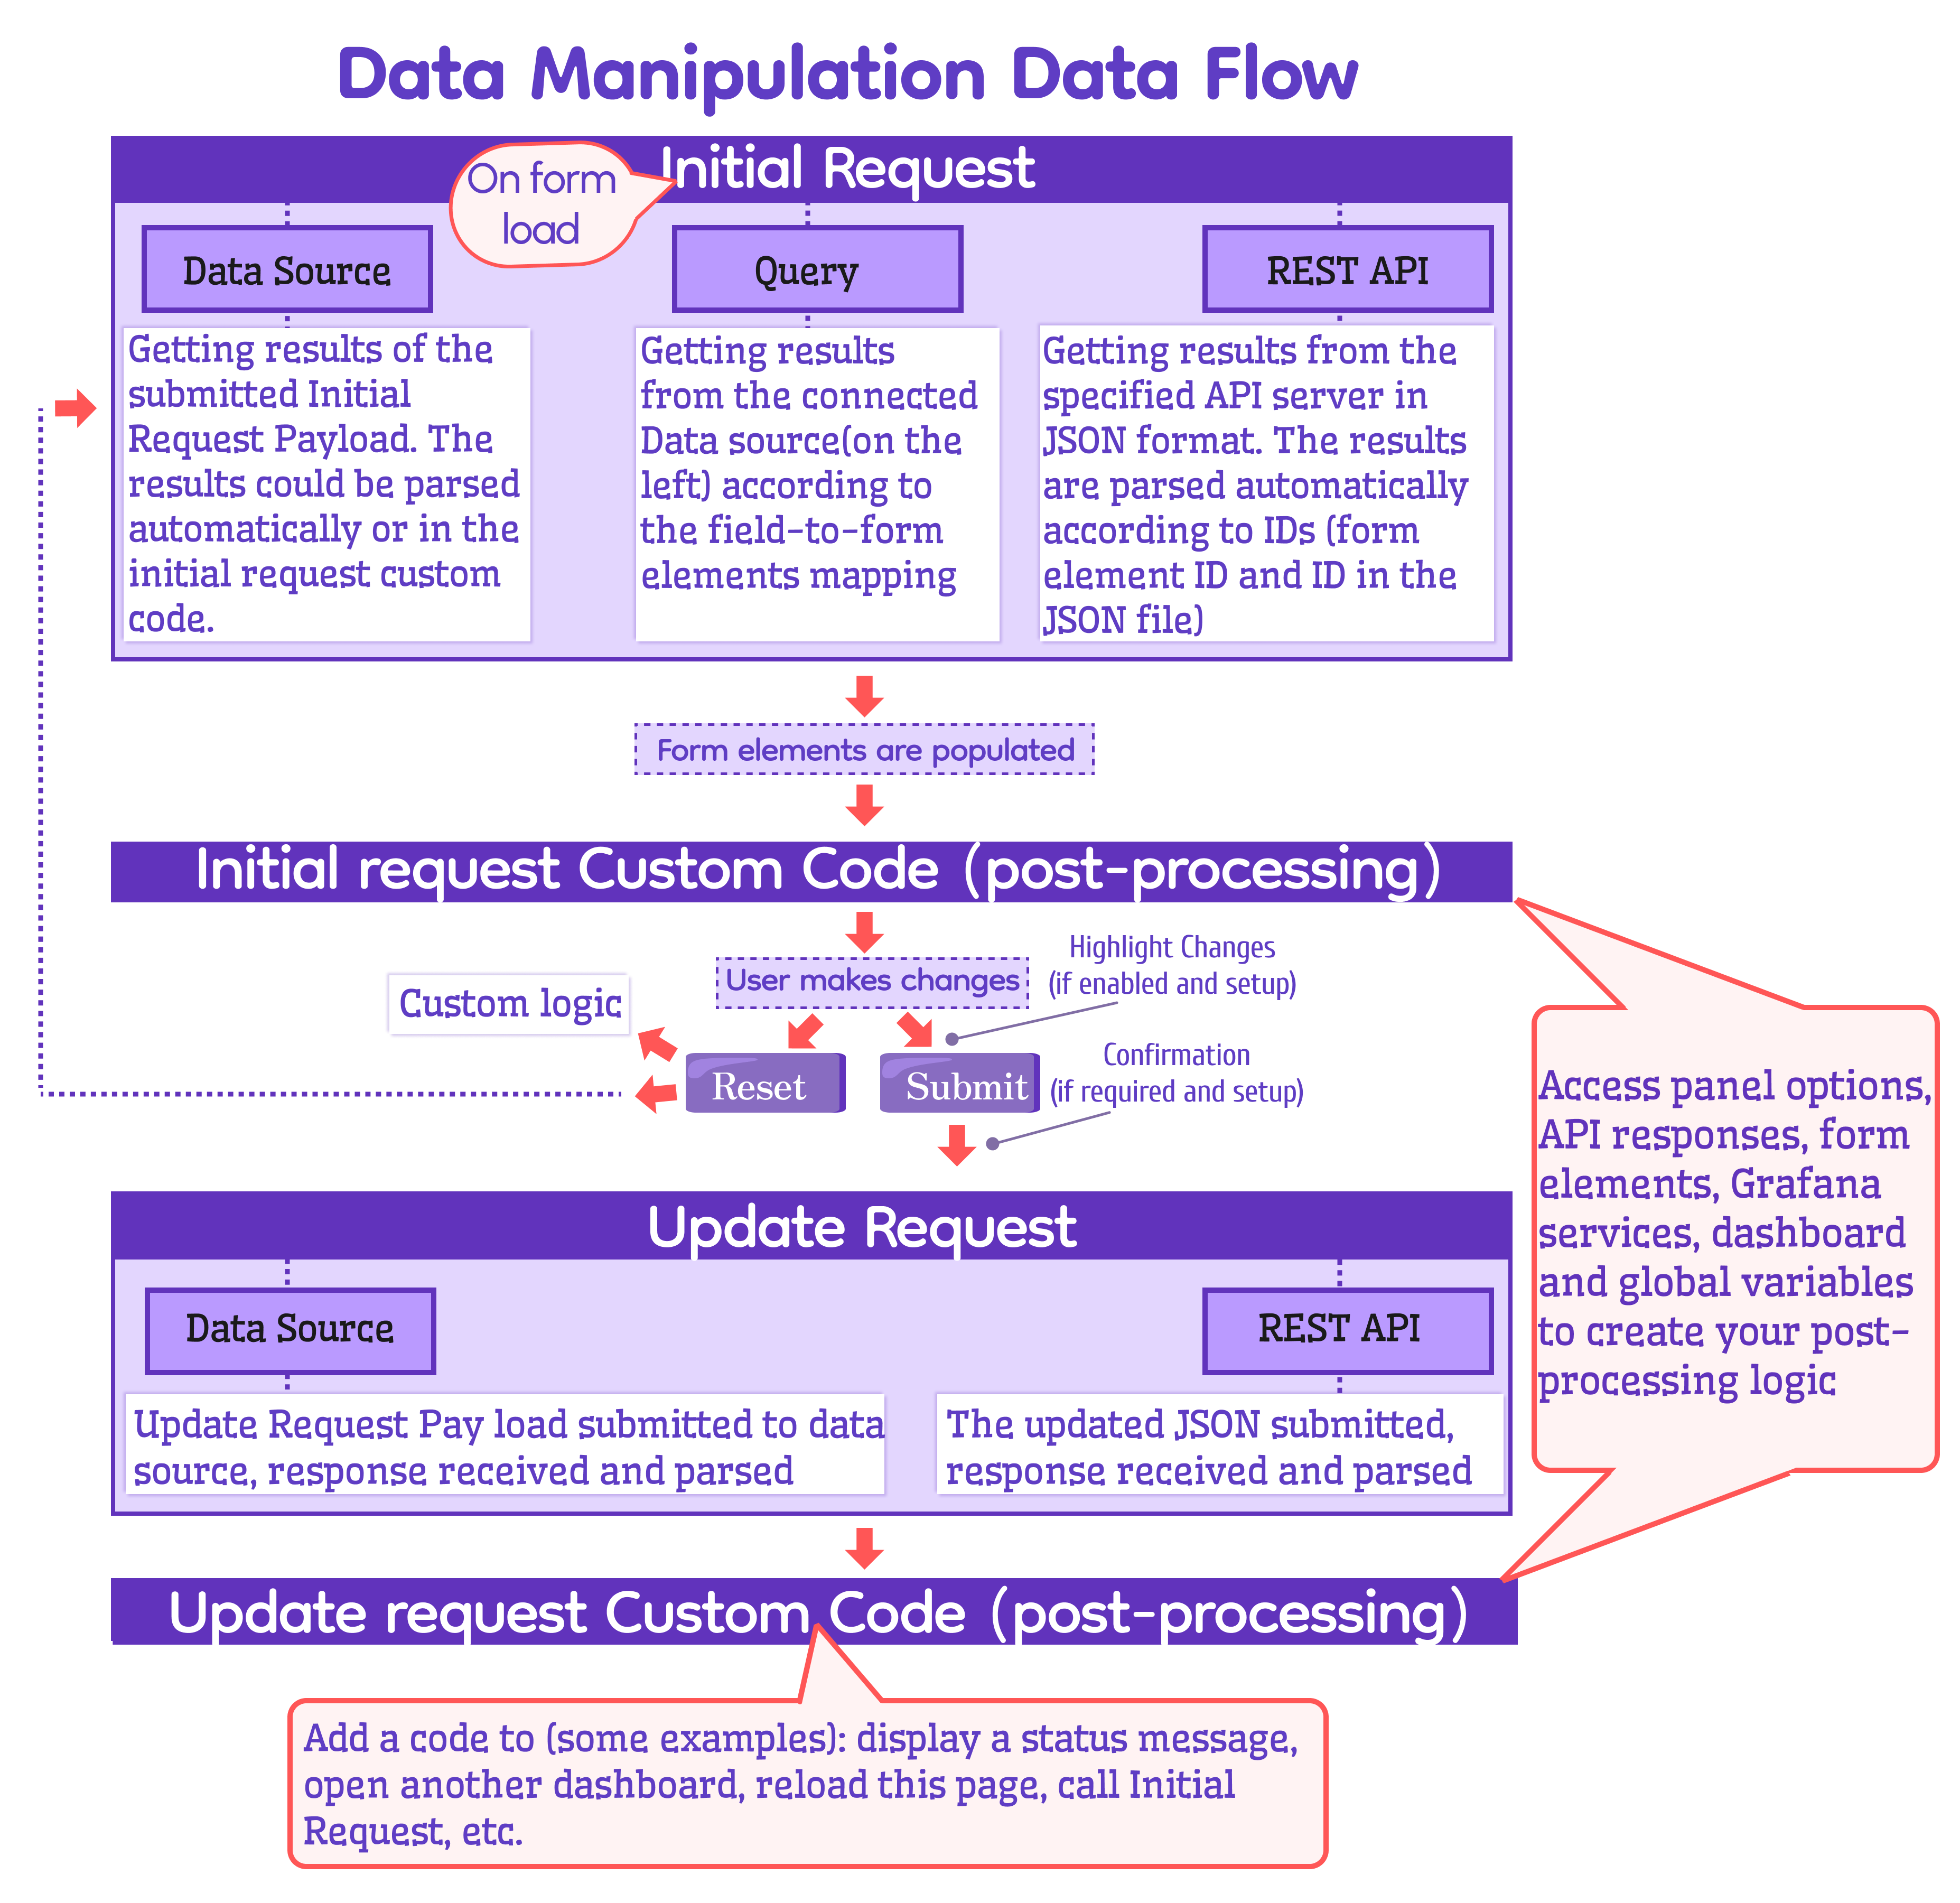 Data flow diagram for the Data Manipulation Panel.